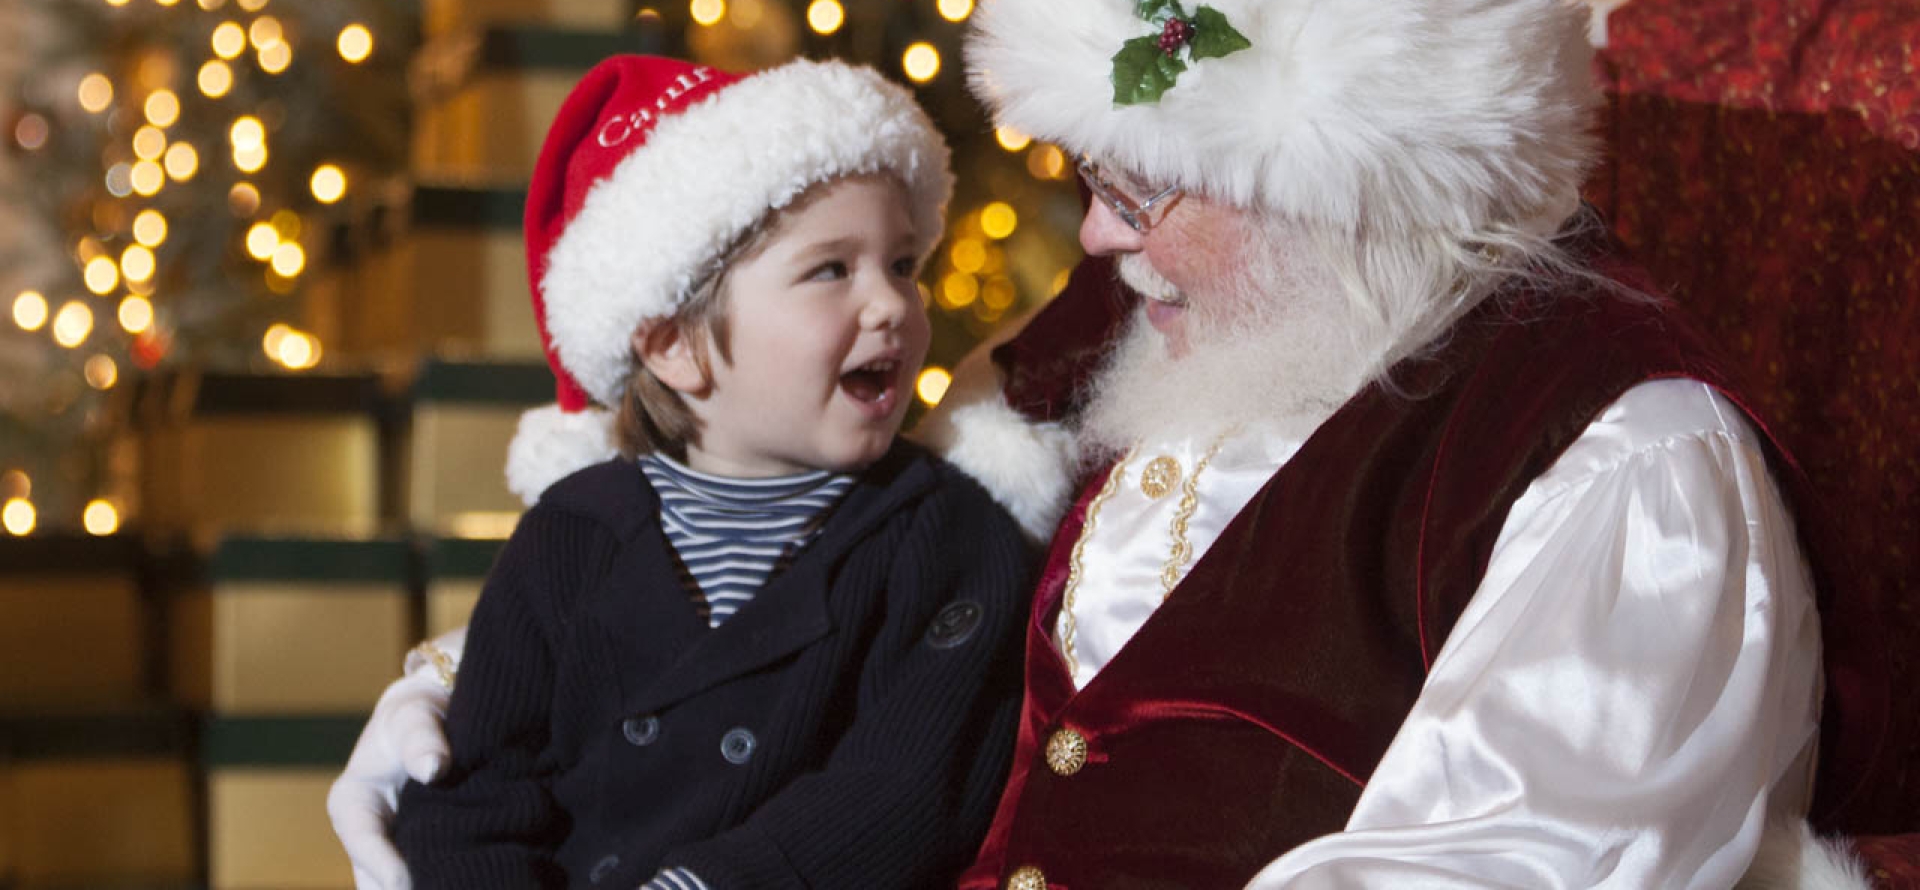 Santa seeing children at Christmas time